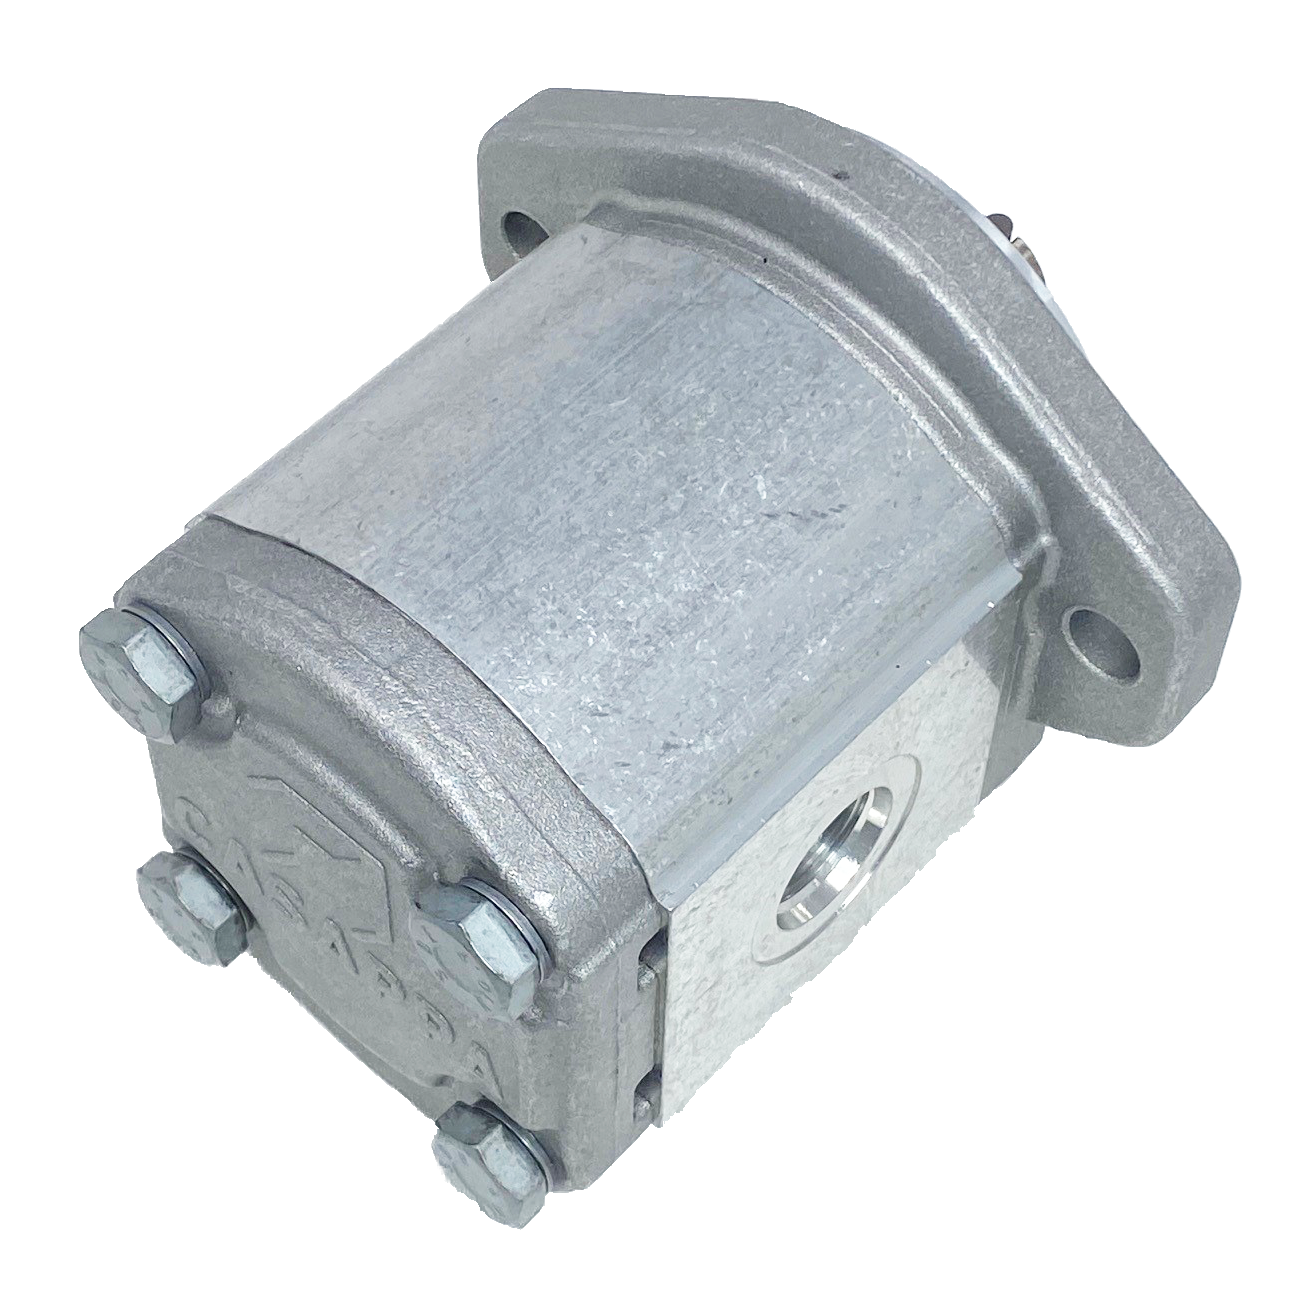 PLM20.16B0-50S1-LOC/OD-N-EL : Casappa Polaris Gear Motor, 16.85cc, 3625psi Rated, 3000RPM, Reversible Interior Drain, 3/4" Bore x 3/16" Key Shaft, SAE A 2-Bolt Flange, 0.625 (5/8") #10 SAE Inlet, 0.75 (3/4") #12 SAE Outlet, Aluminum Body & Flange